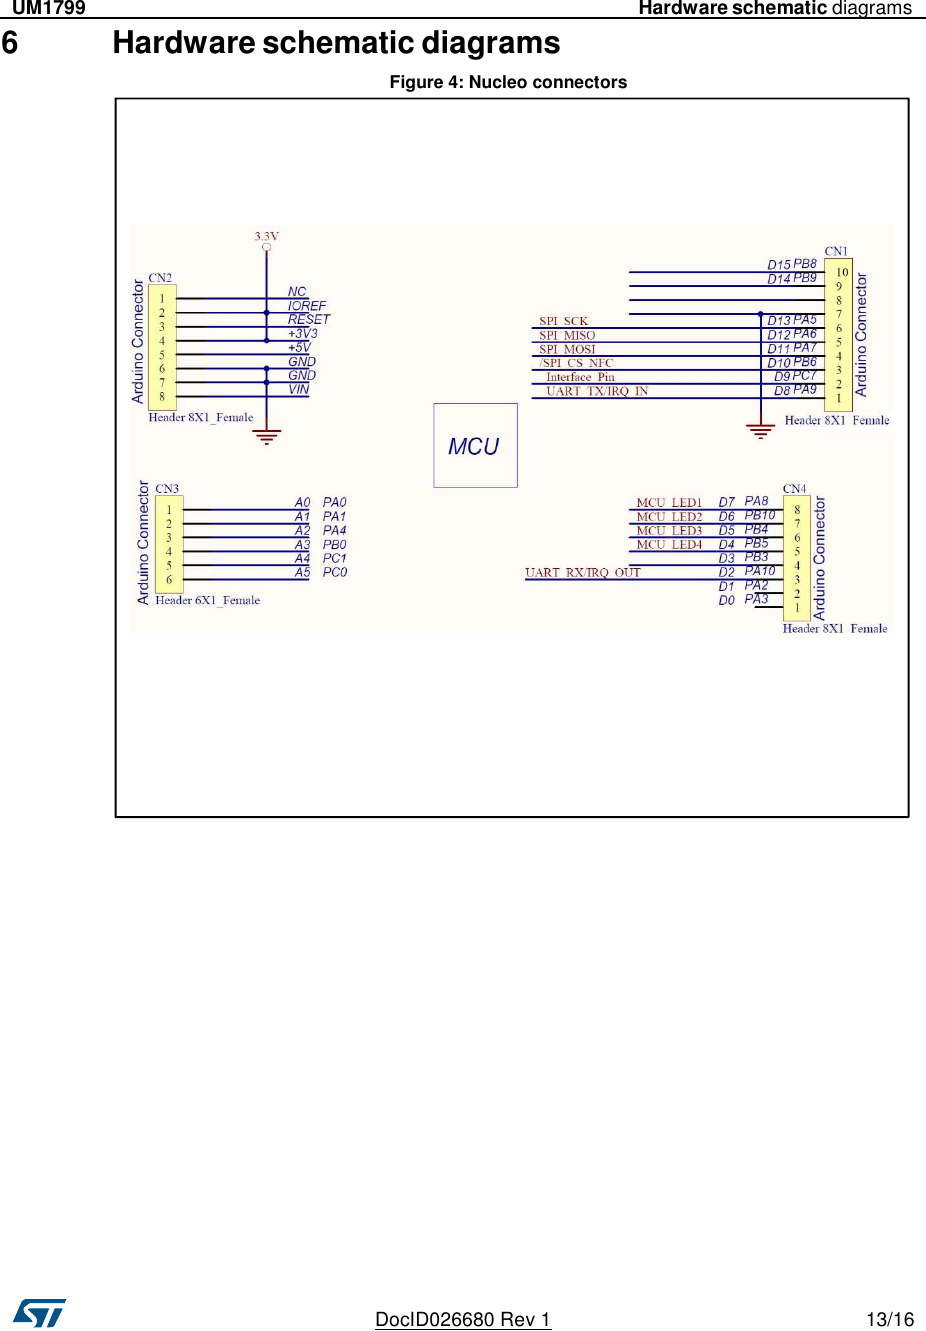 DocID026680 Rev 1 13/16    UM1799  Hardware schematic diagrams   6 Hardware schematic diagrams  Figure 4: Nucleo connectors                    